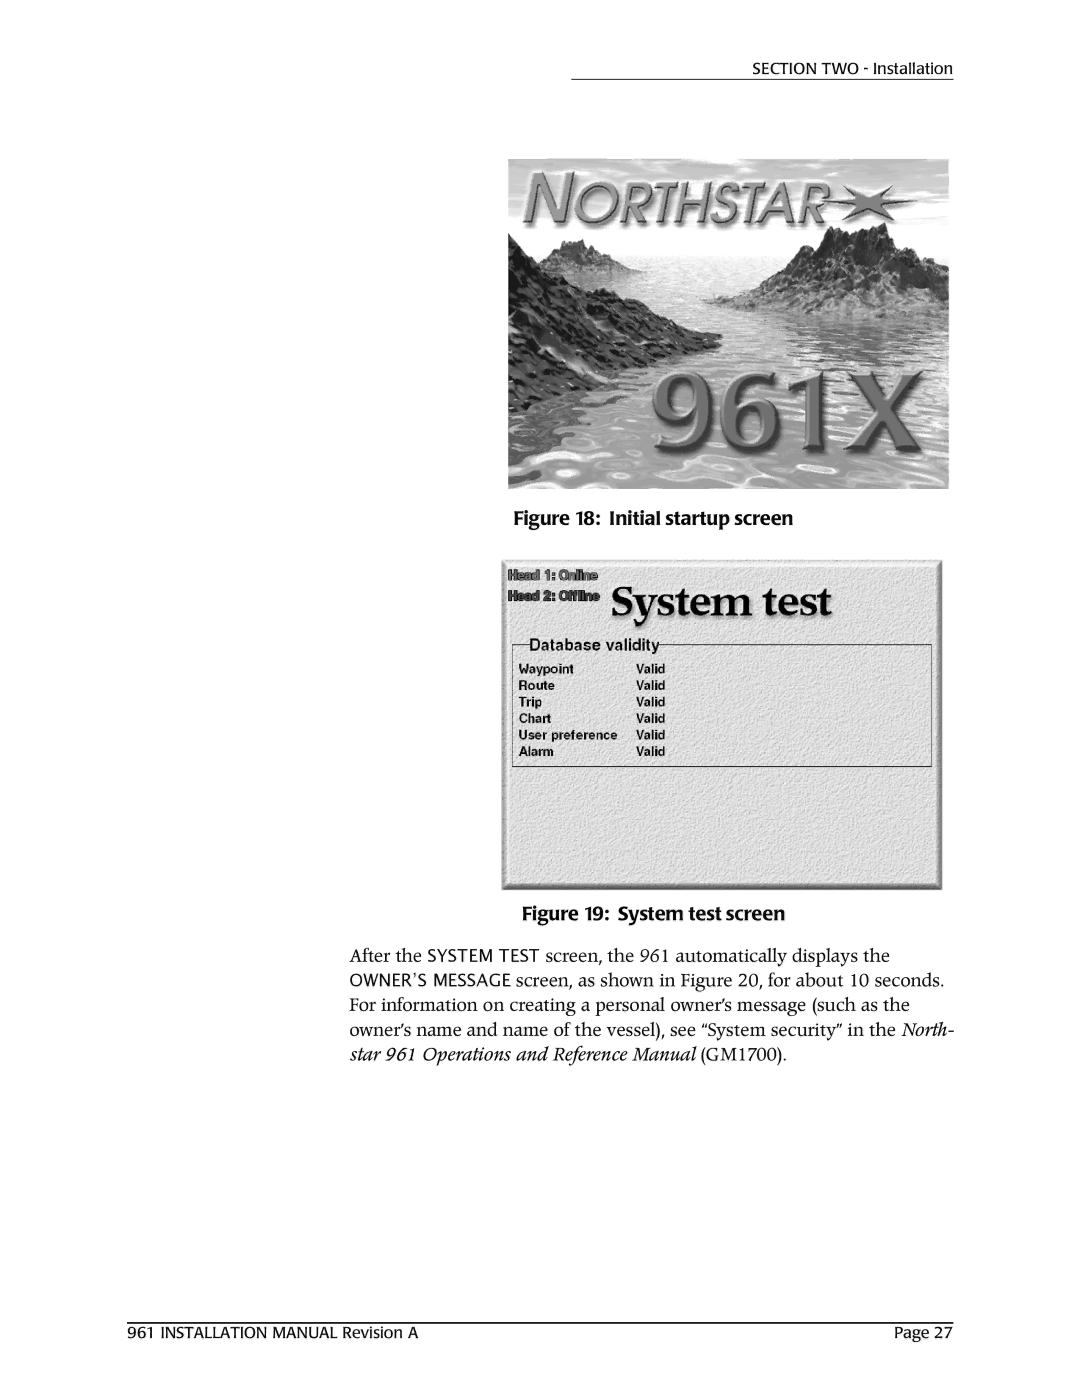 NorthStar Navigation 961XD installation manual Initial startup screen 